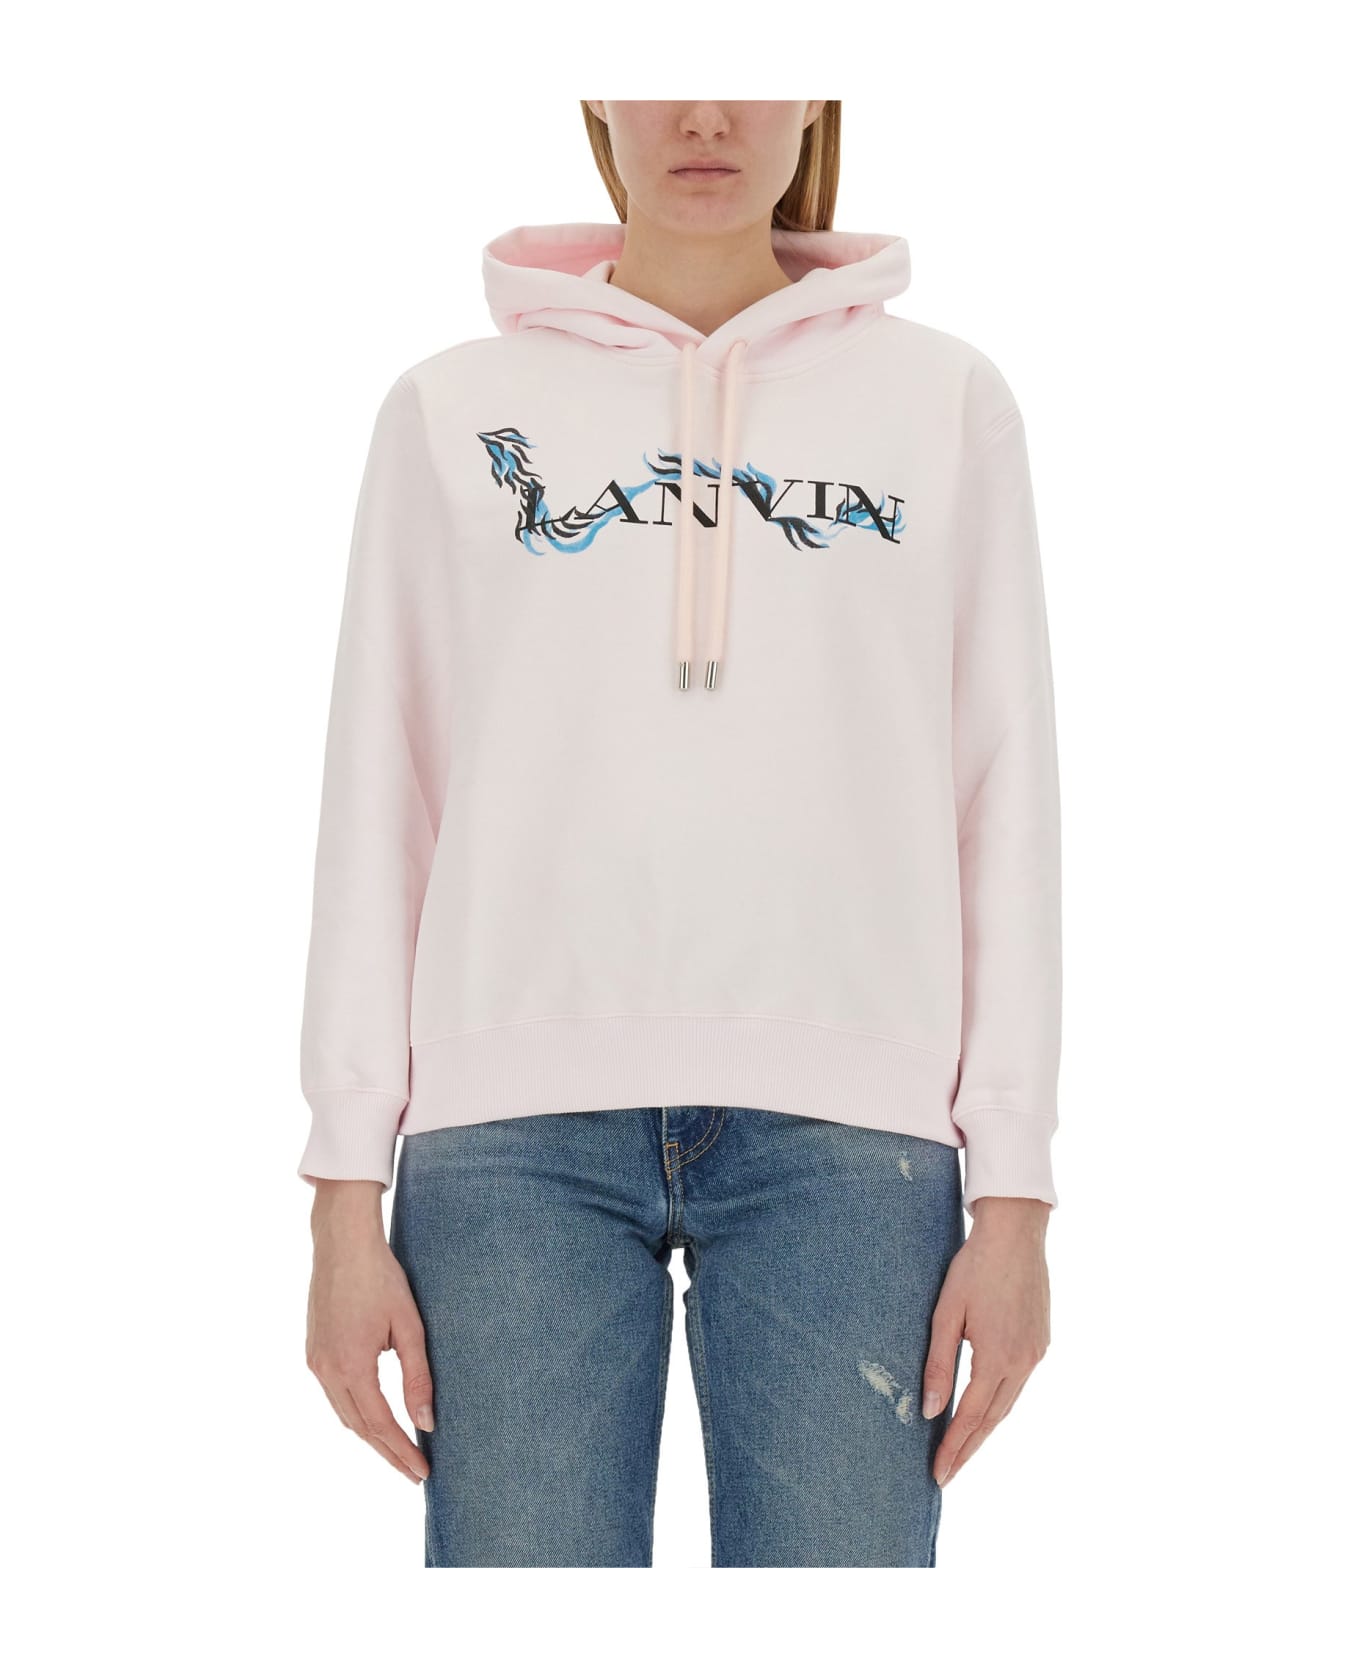 Lanvin Sweatshirt With Print フリース